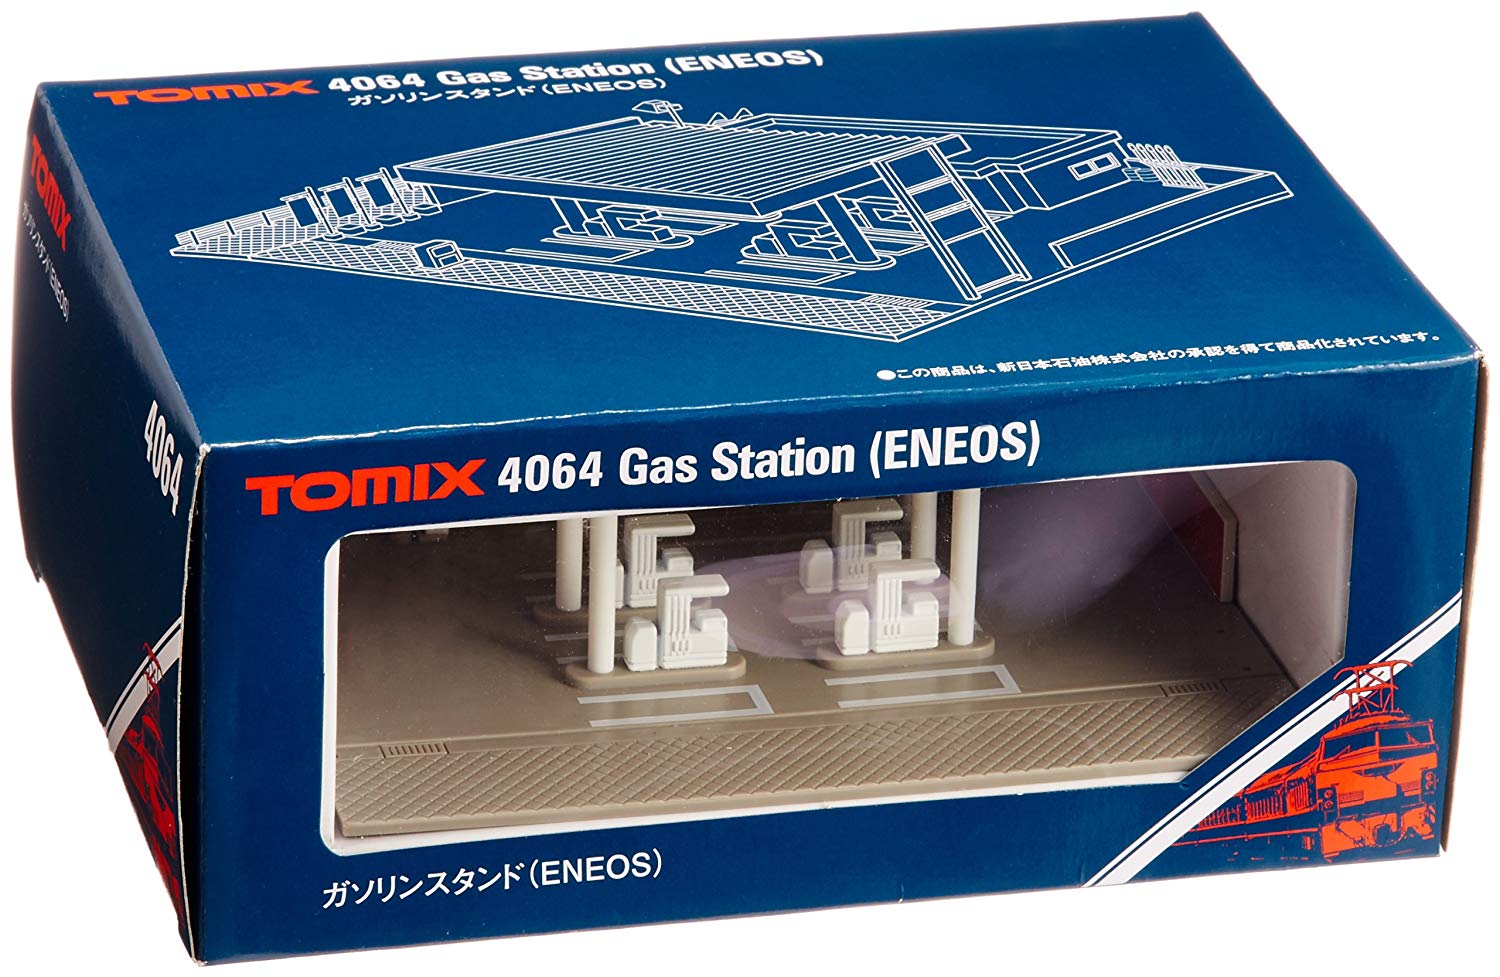 4064 Gas Station (ENEOS)